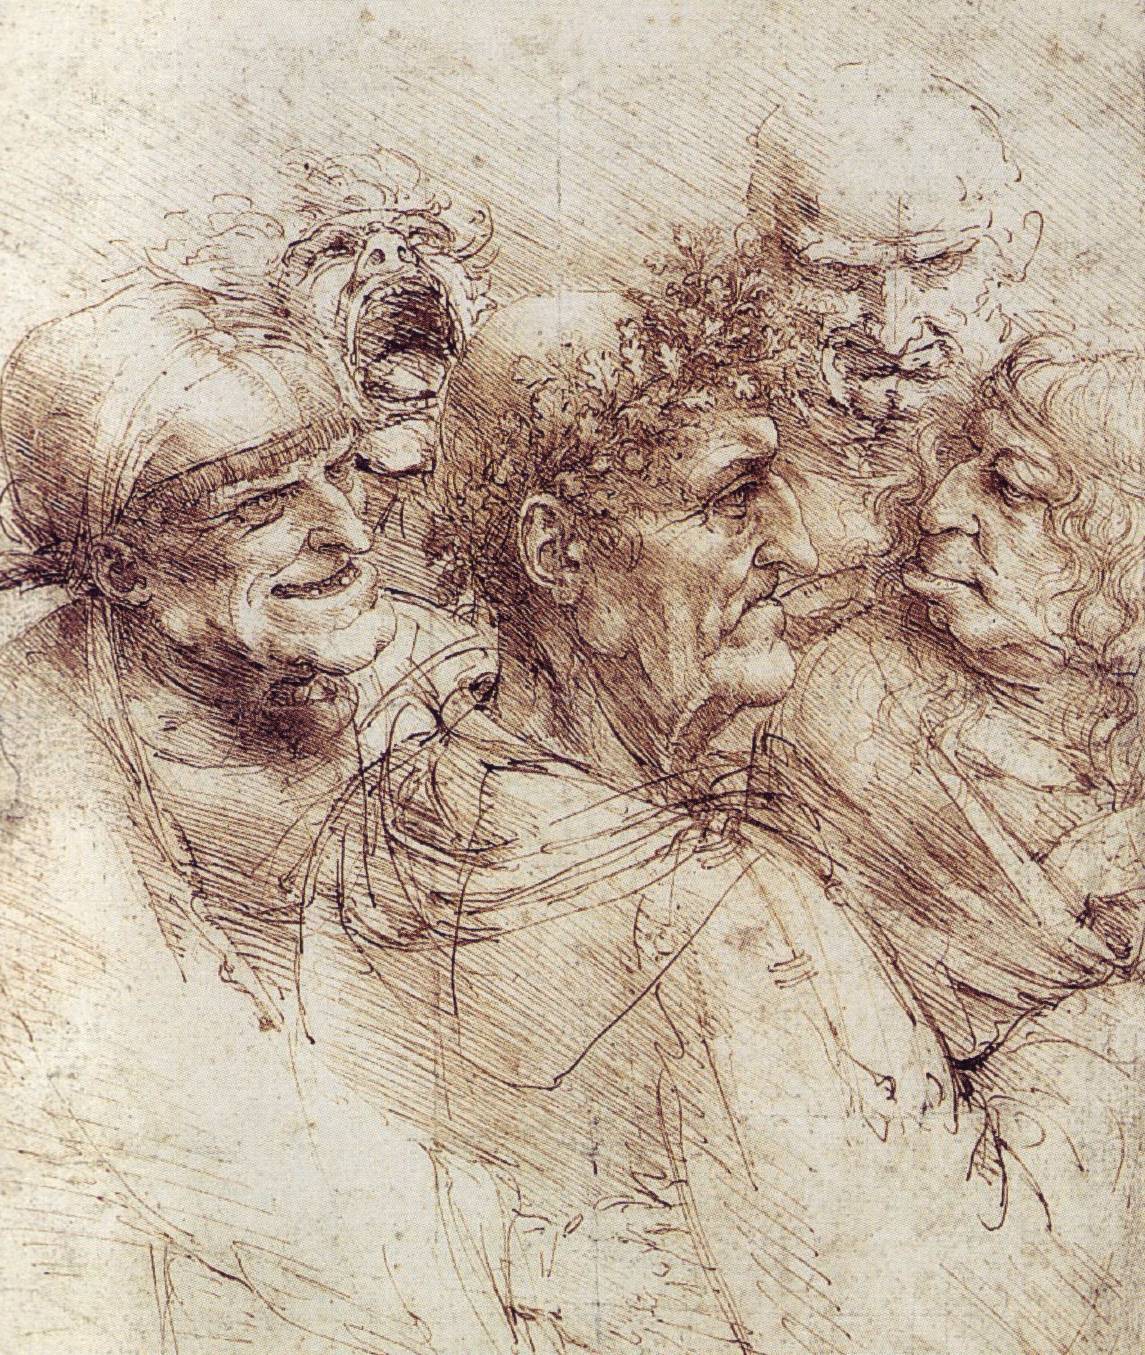 Leonardo+da+Vinci-1452-1519 (834).jpg